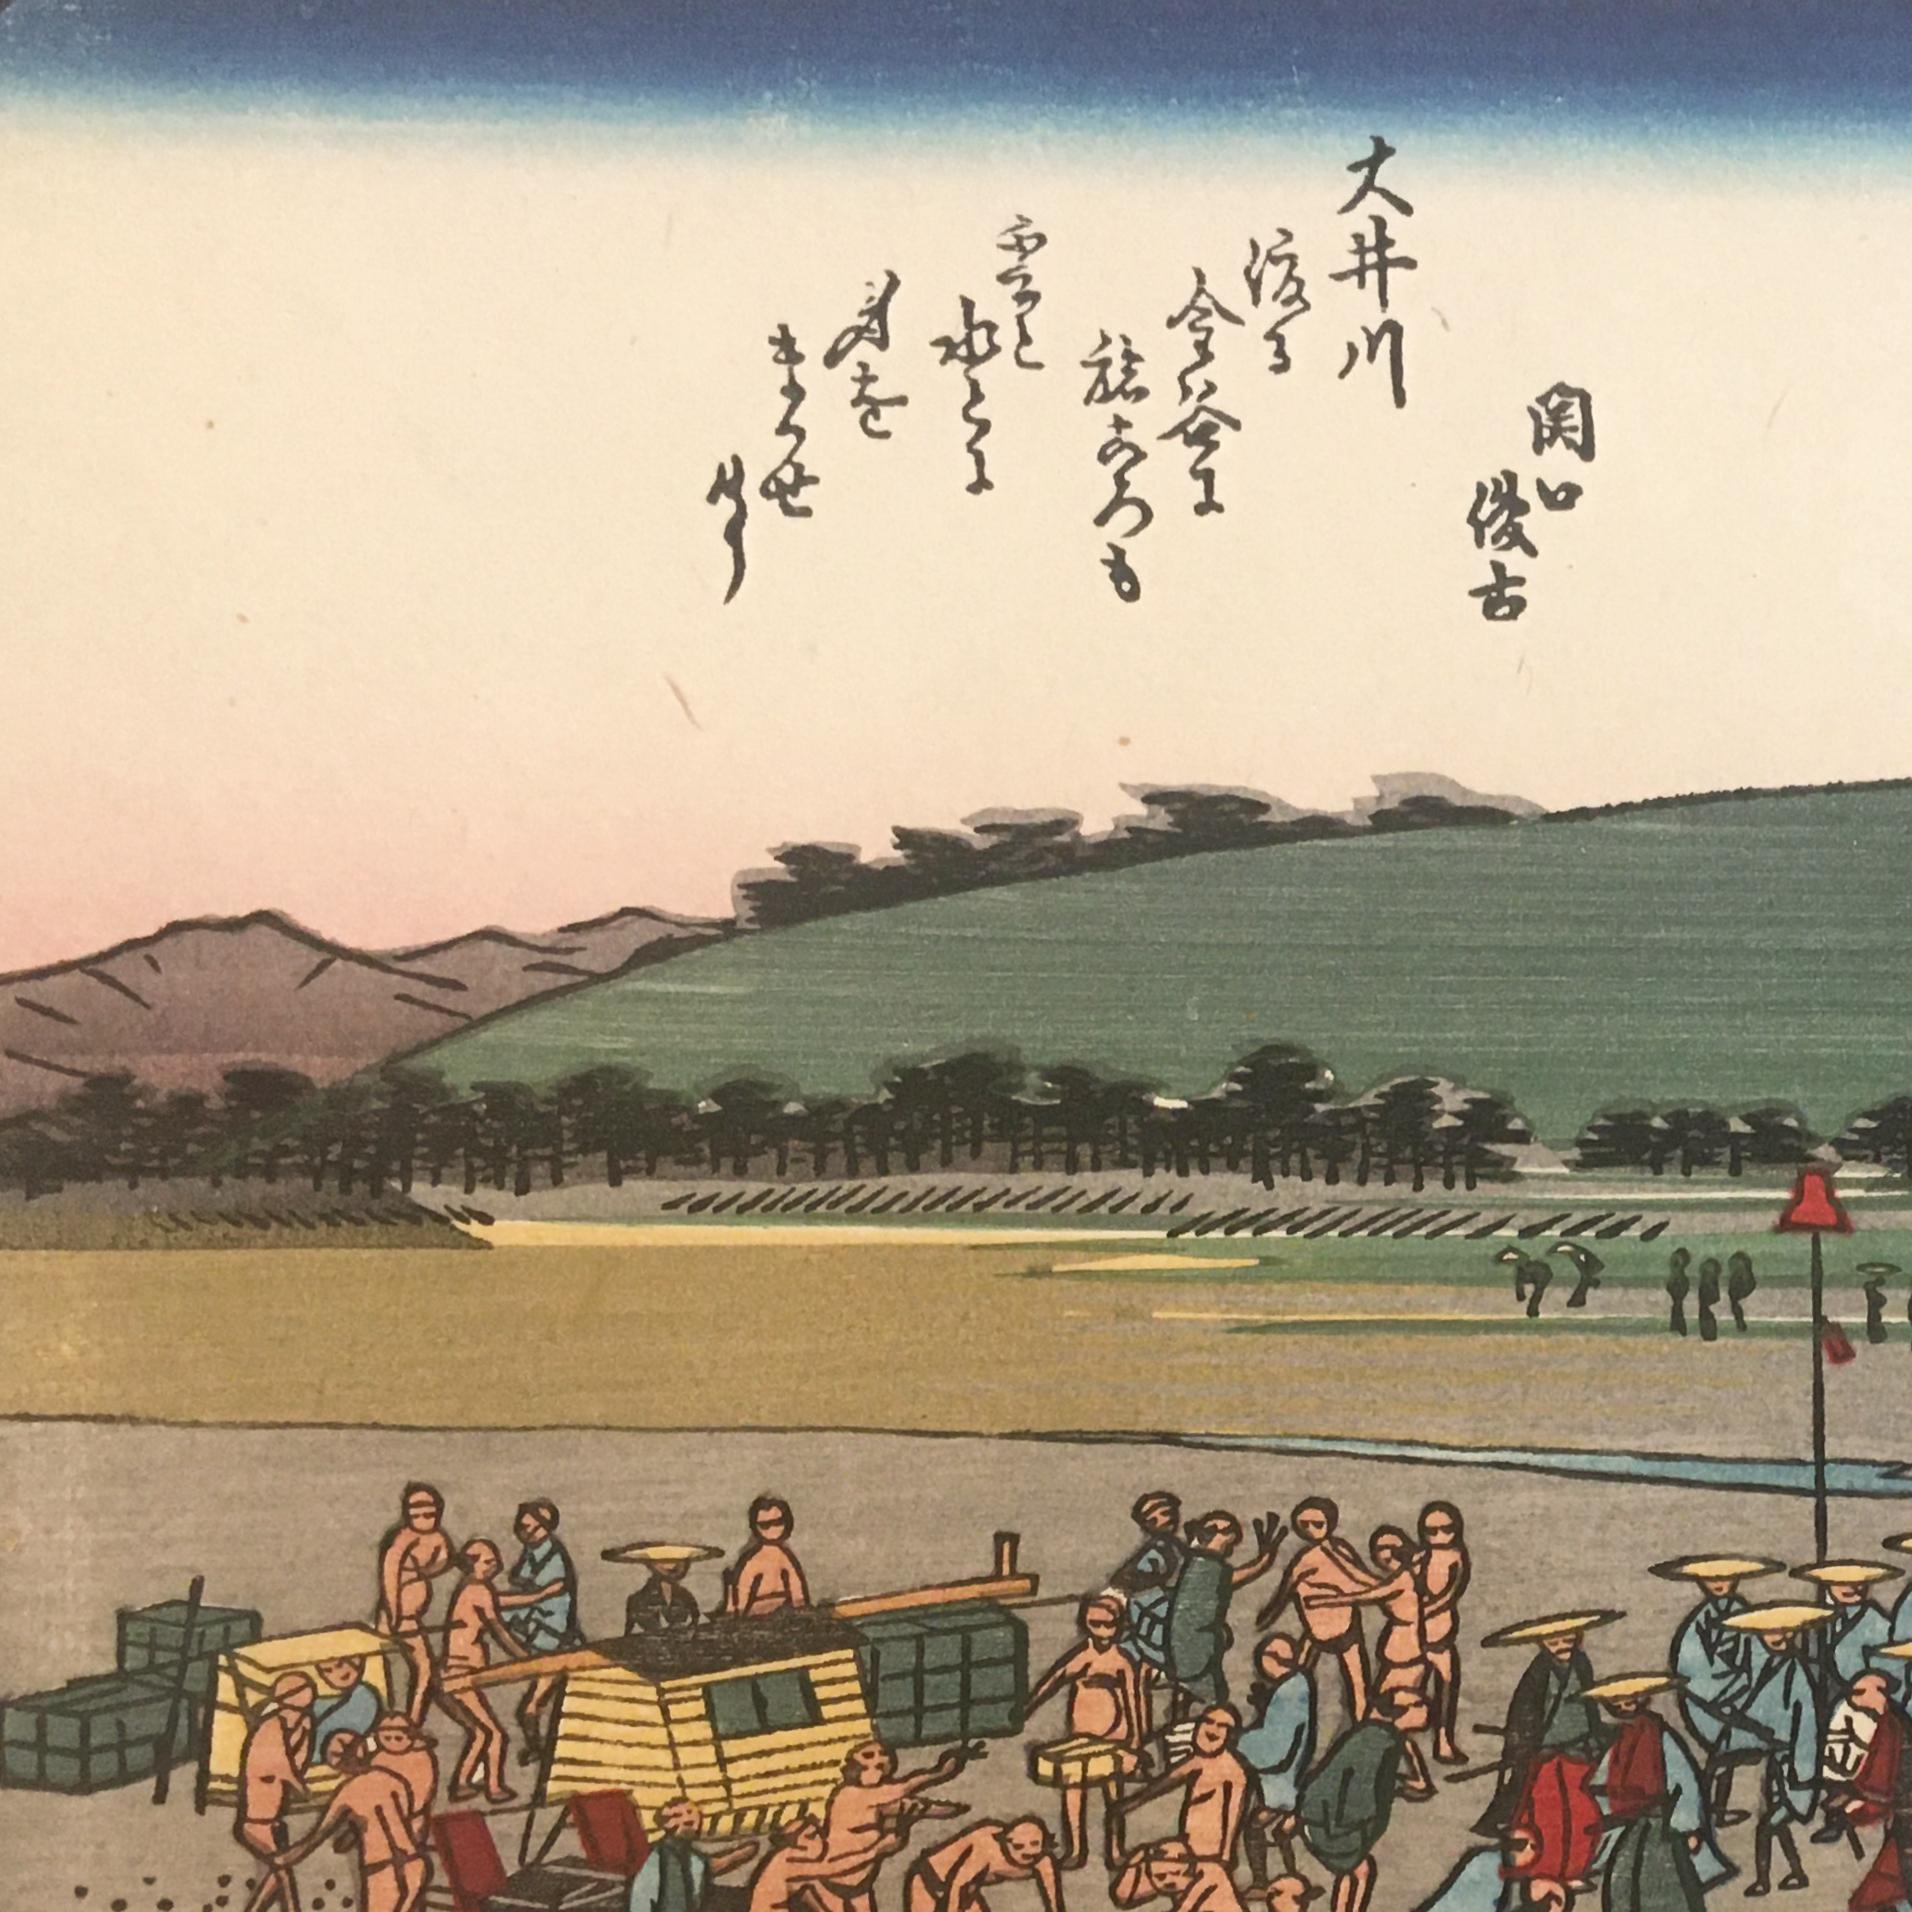 'Travelers at Kanaya', After Utagawa Hiroshige, Ukiyo-E Woodblock, Tokaido, Edo - Brown Landscape Print by Utagawa Hiroshige (Ando Hiroshige)